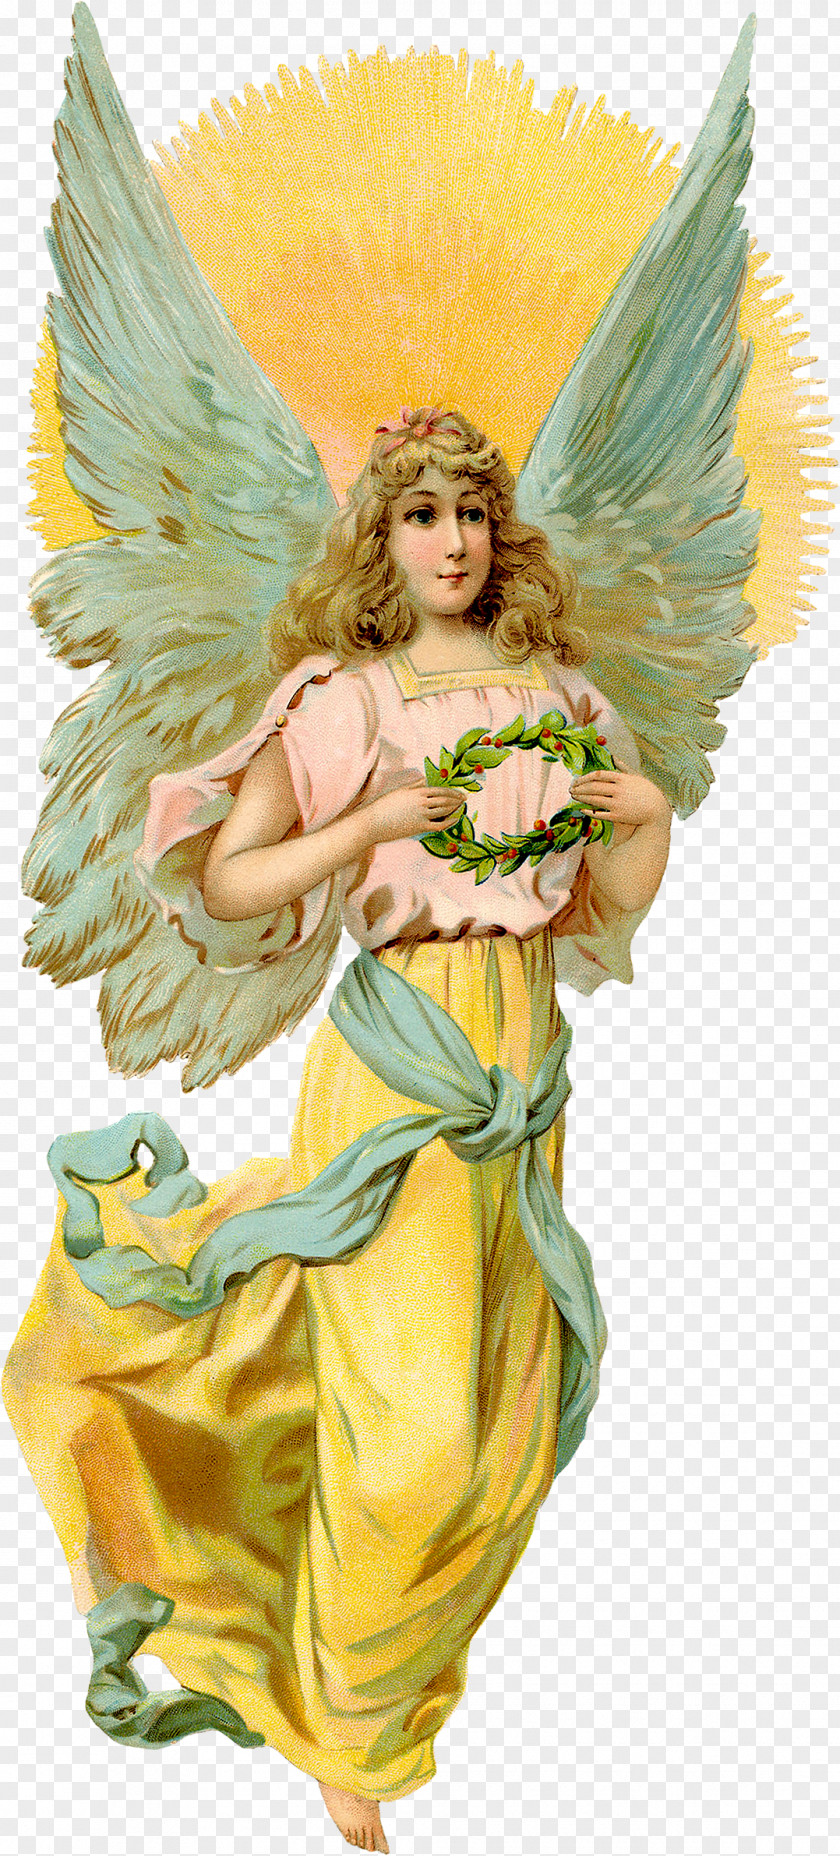 Blue Wreath Mythology Legendary Creature Fairy Character Supernatural PNG